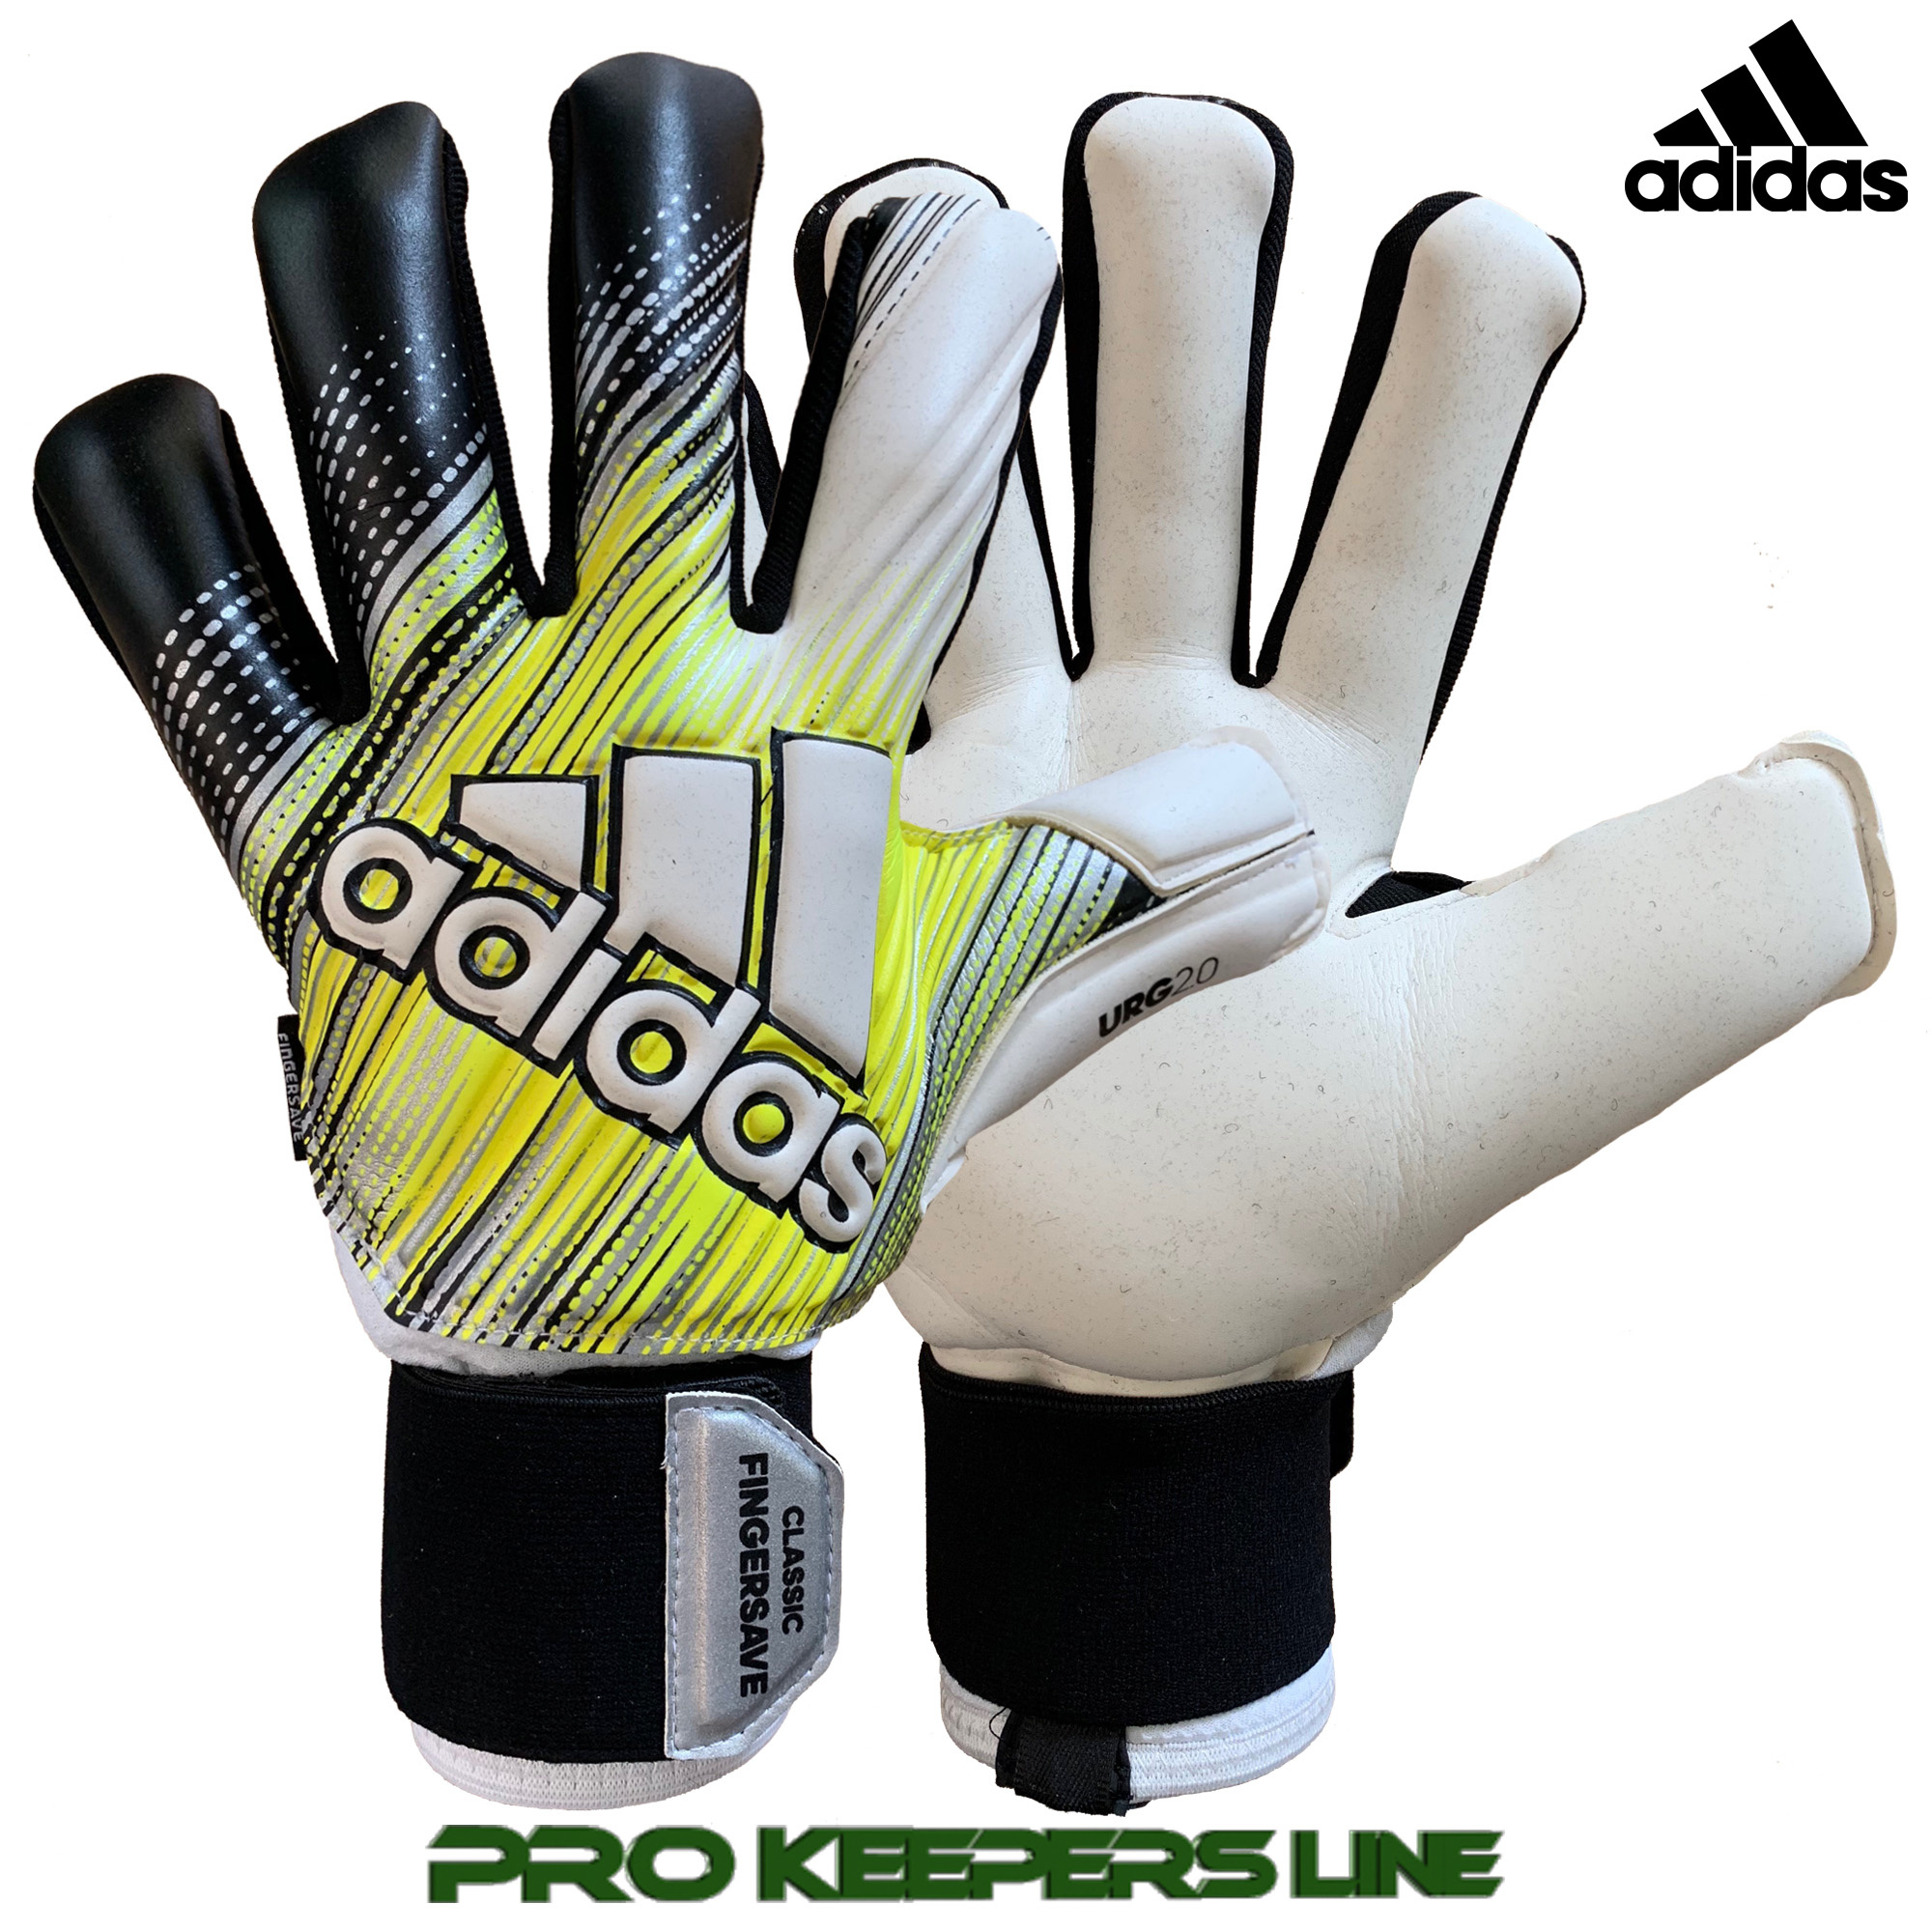 adidas classic pro goalkeeper gloves